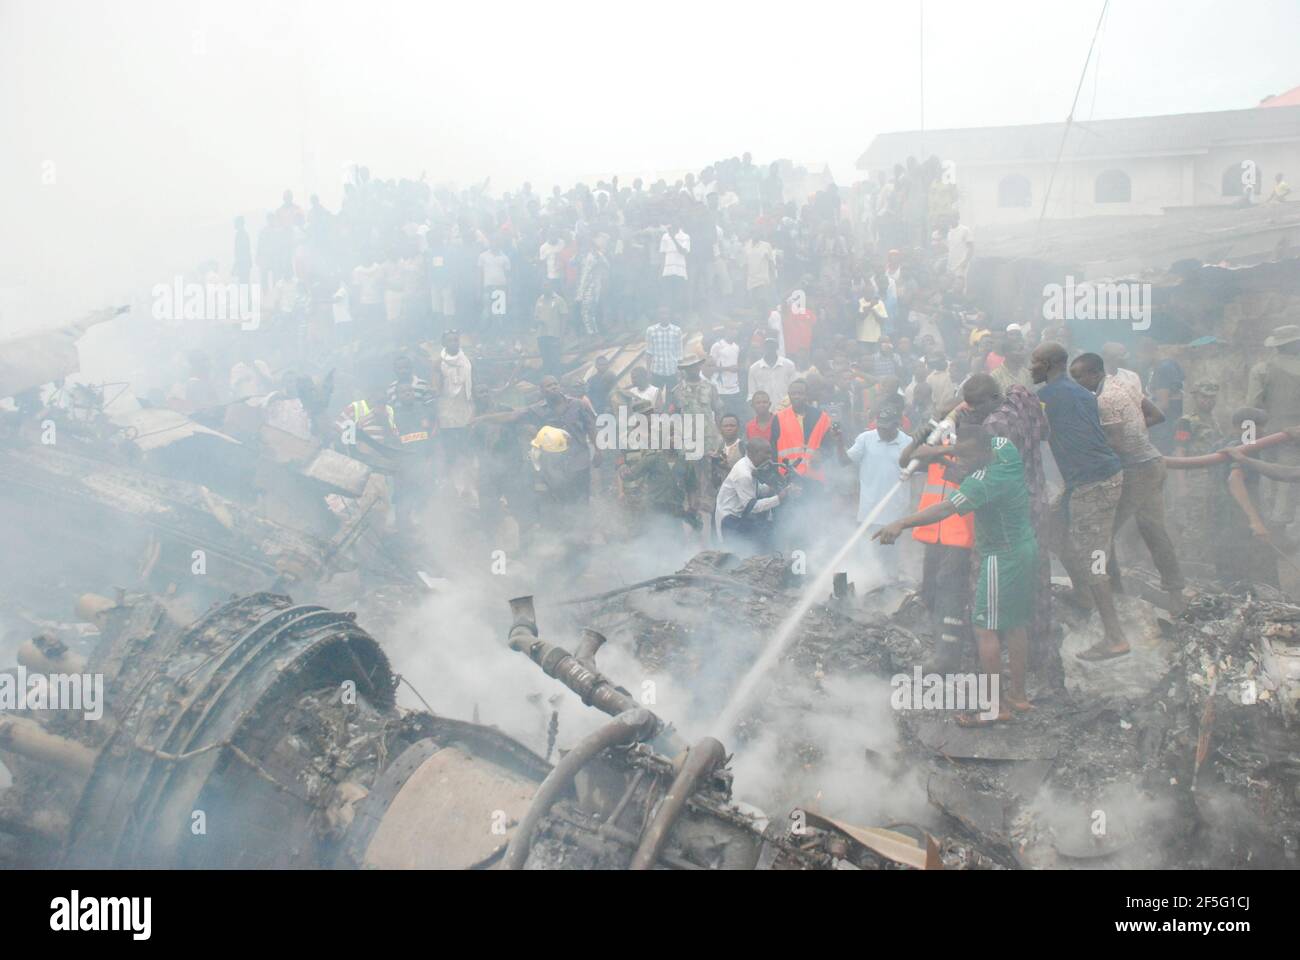 Dana Plane Crash: Rescue team at the crash site, Iju-Ishaga, Lagos State, Nigeria. Stock Photo